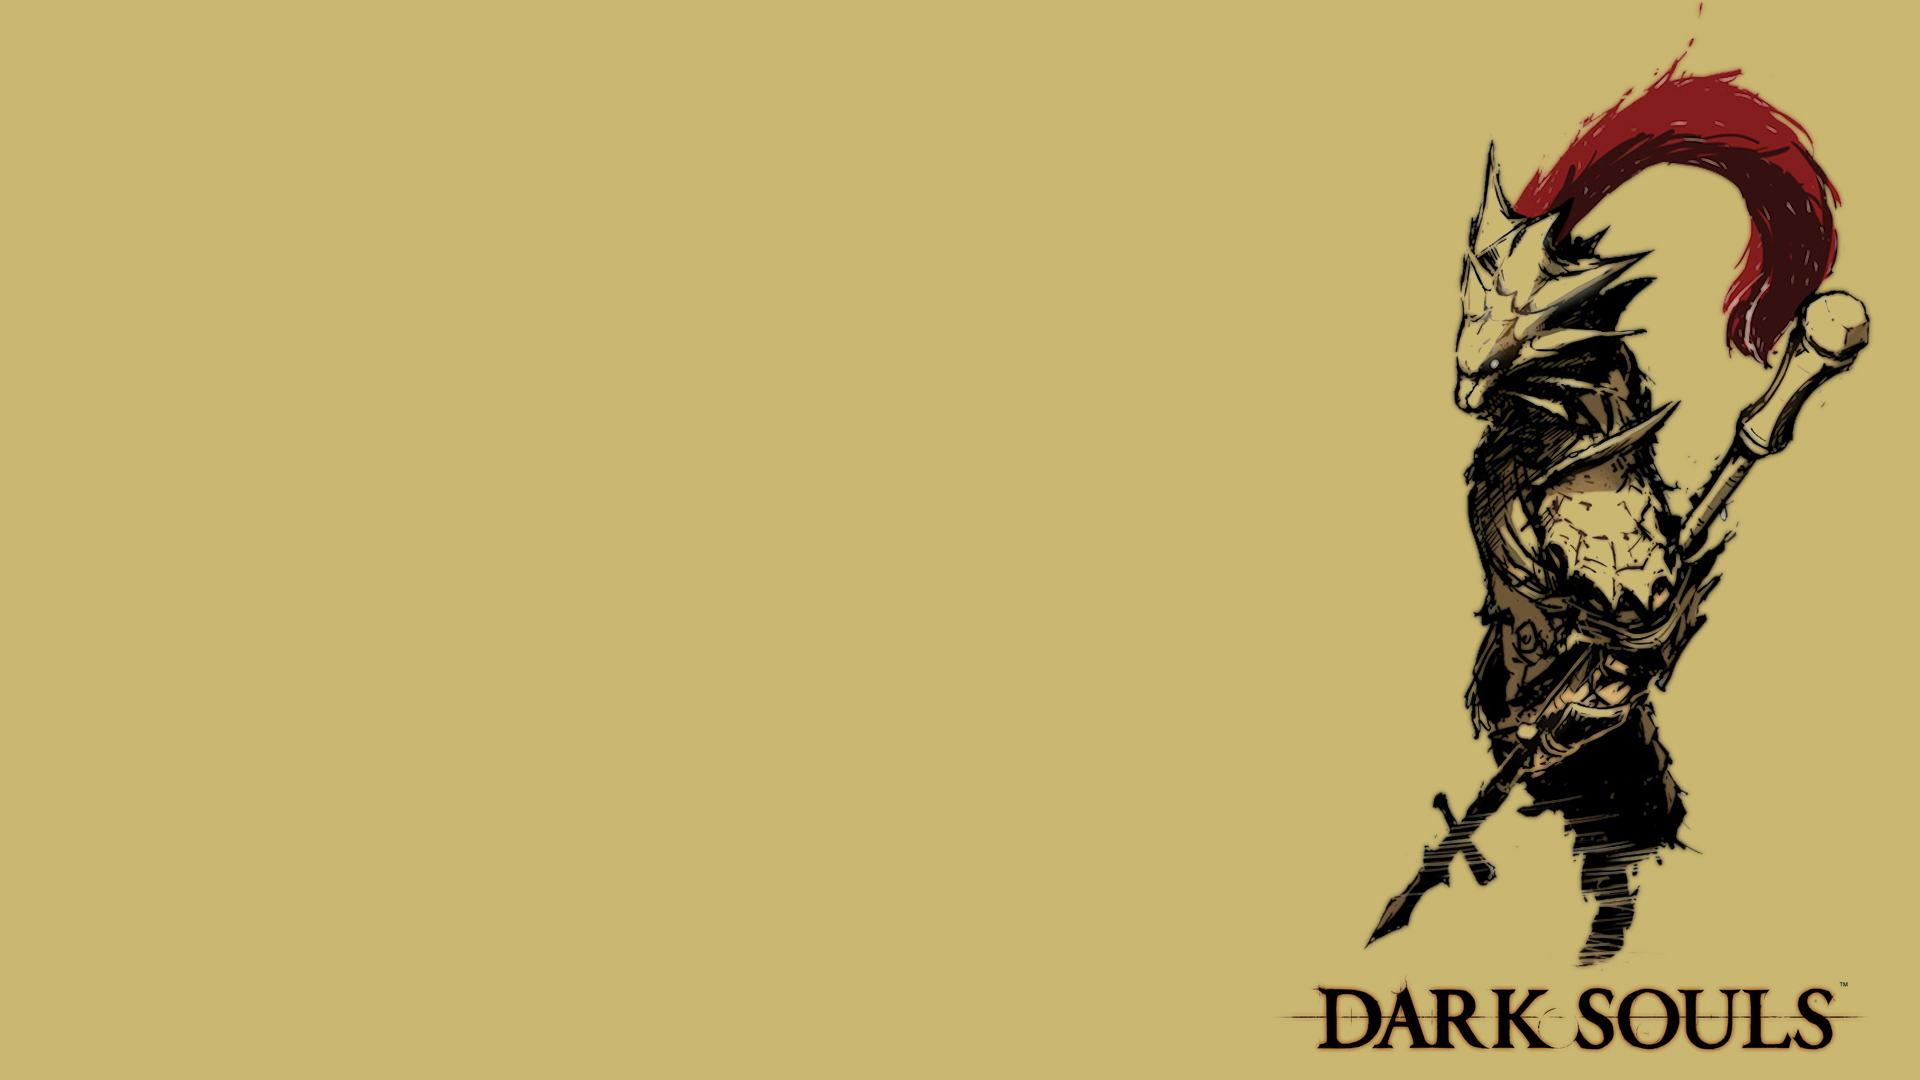 Wallpaper Dark Souls vdeo game